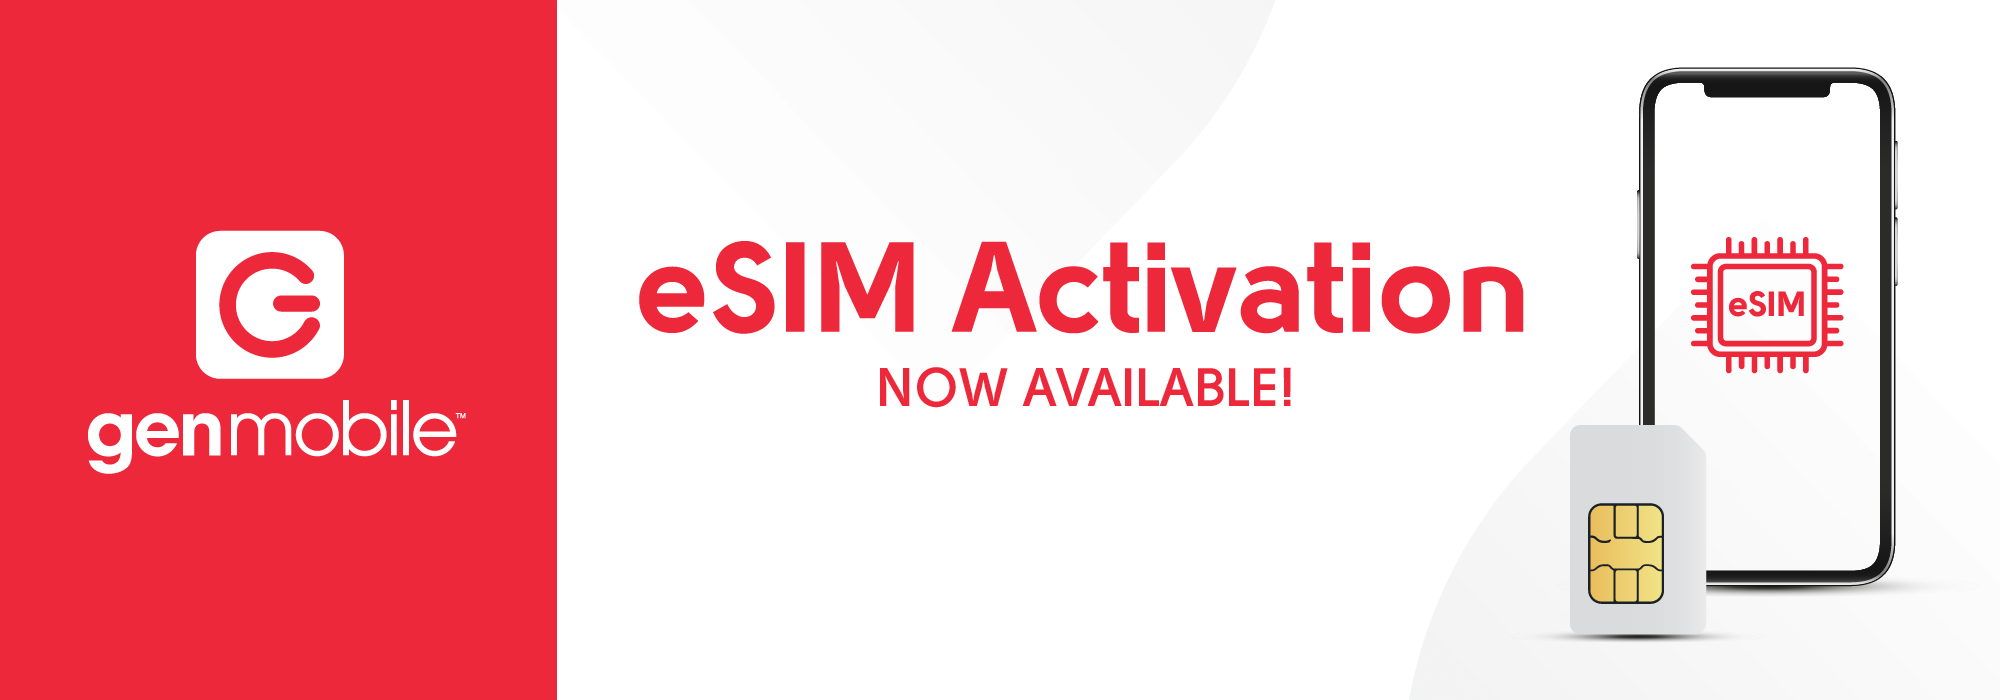 Gen Mobile eSim Activation Now Available